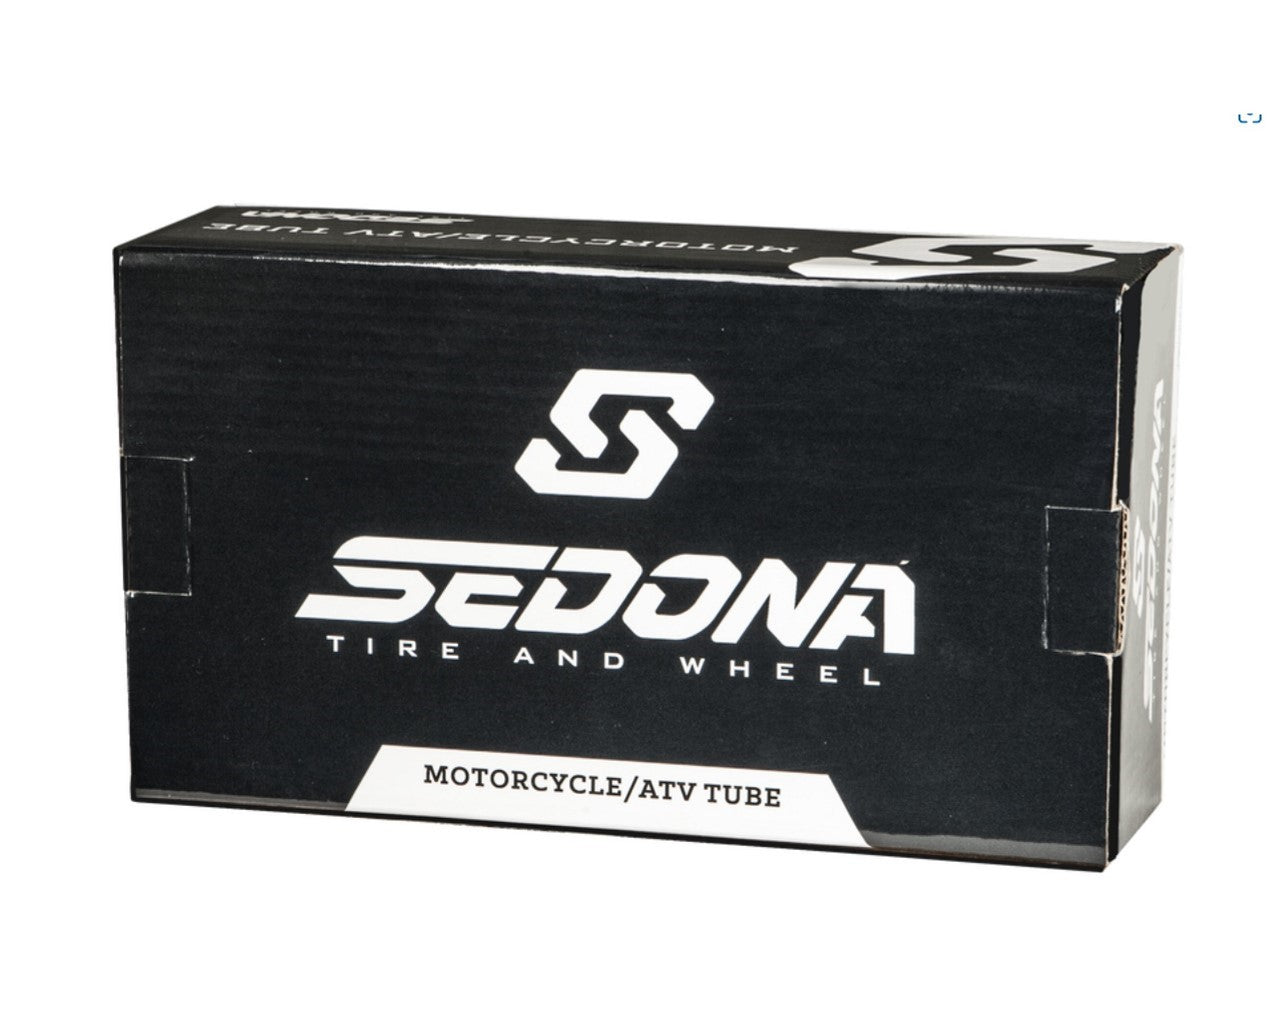 Sedona Motorcycle Inner Tube TR-4 360/410-14 90/100-14 110/90-14 870131